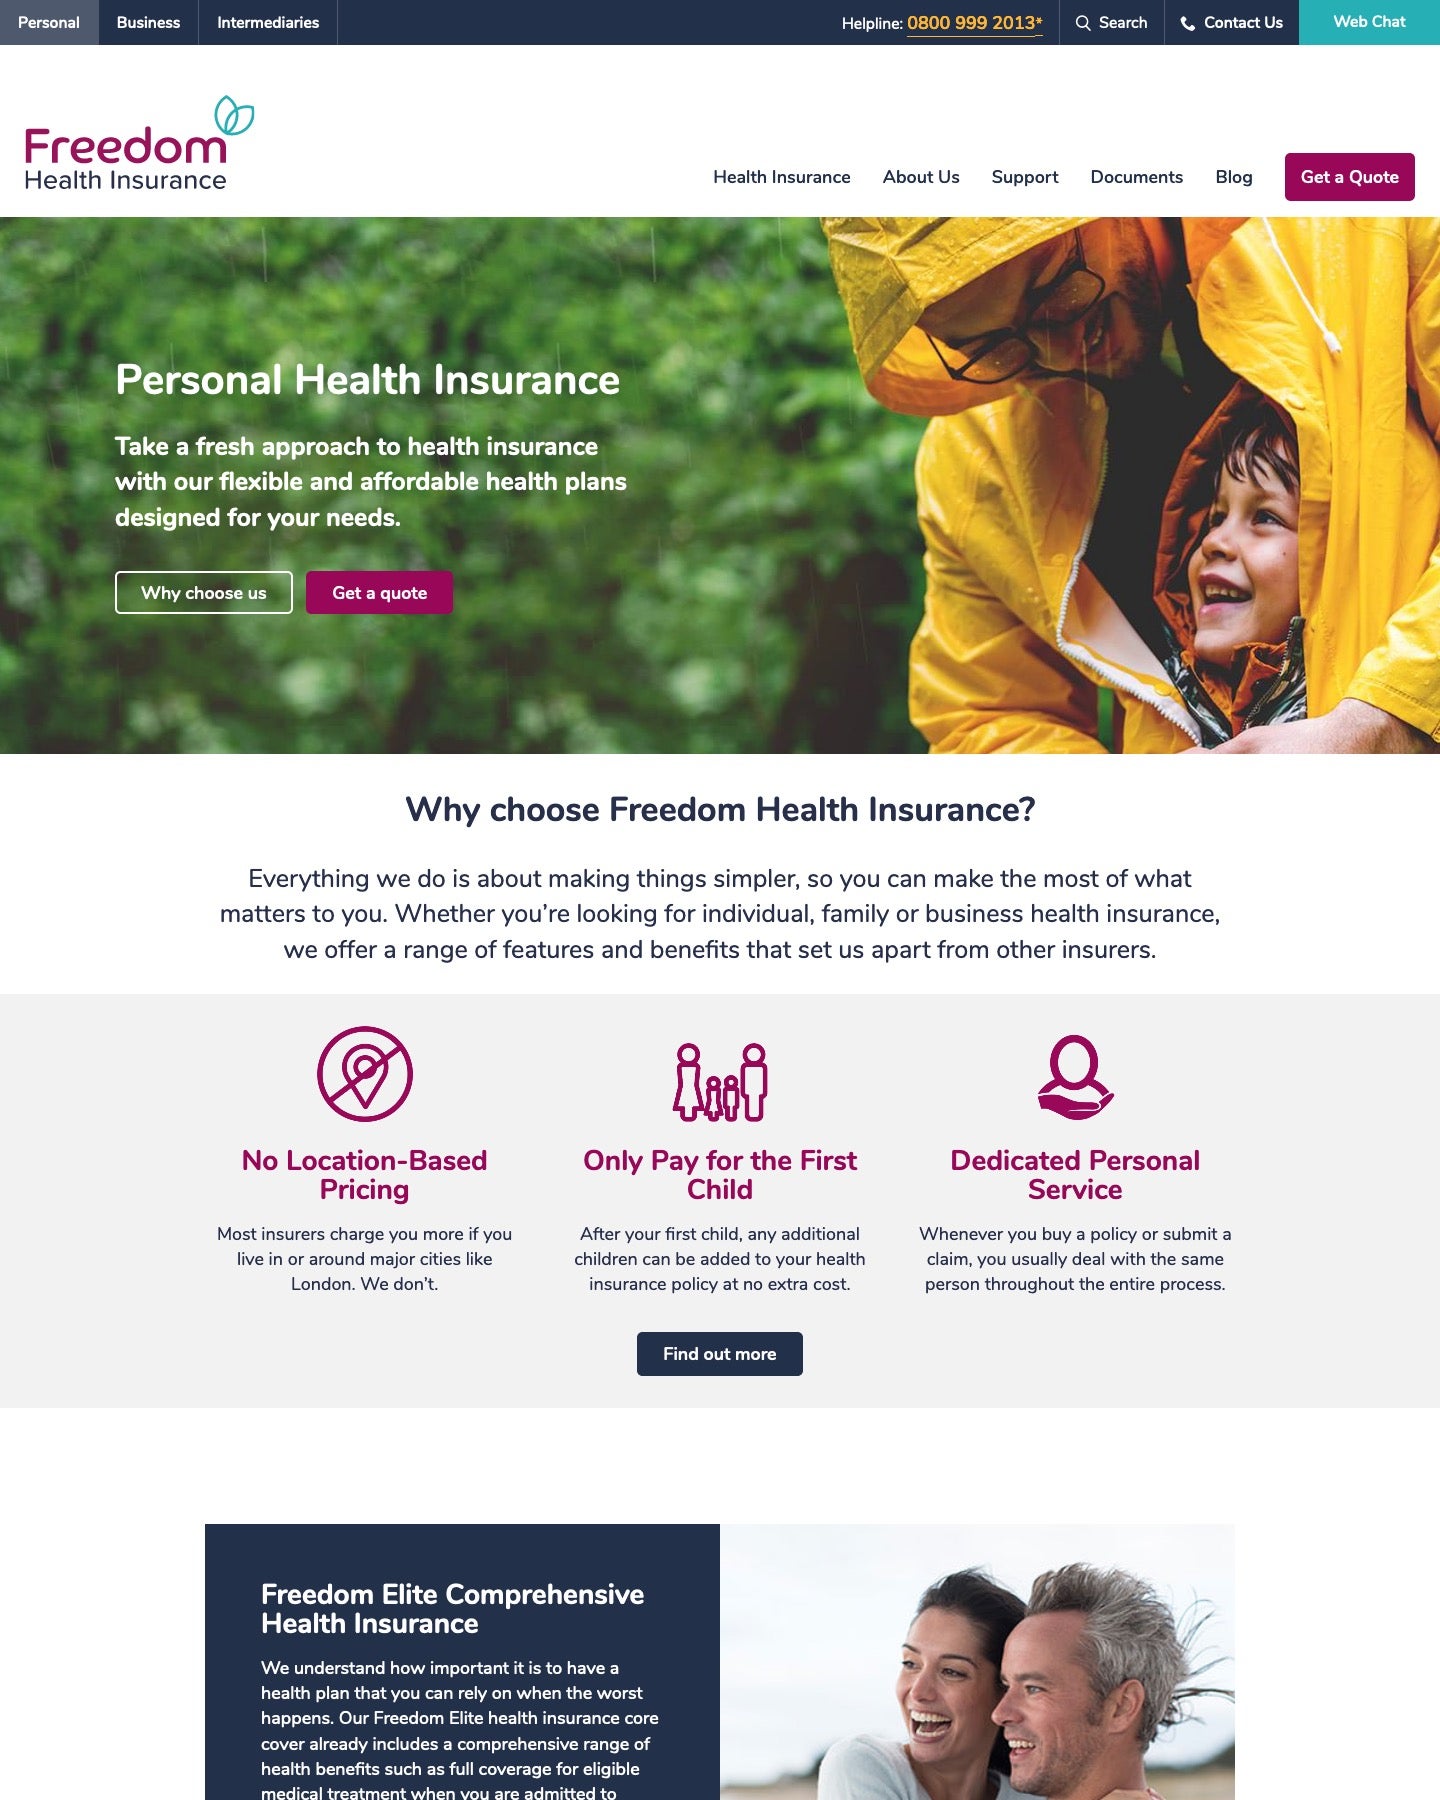 Freedom Health Insurance Website Design & Build i3 Digital Case Study